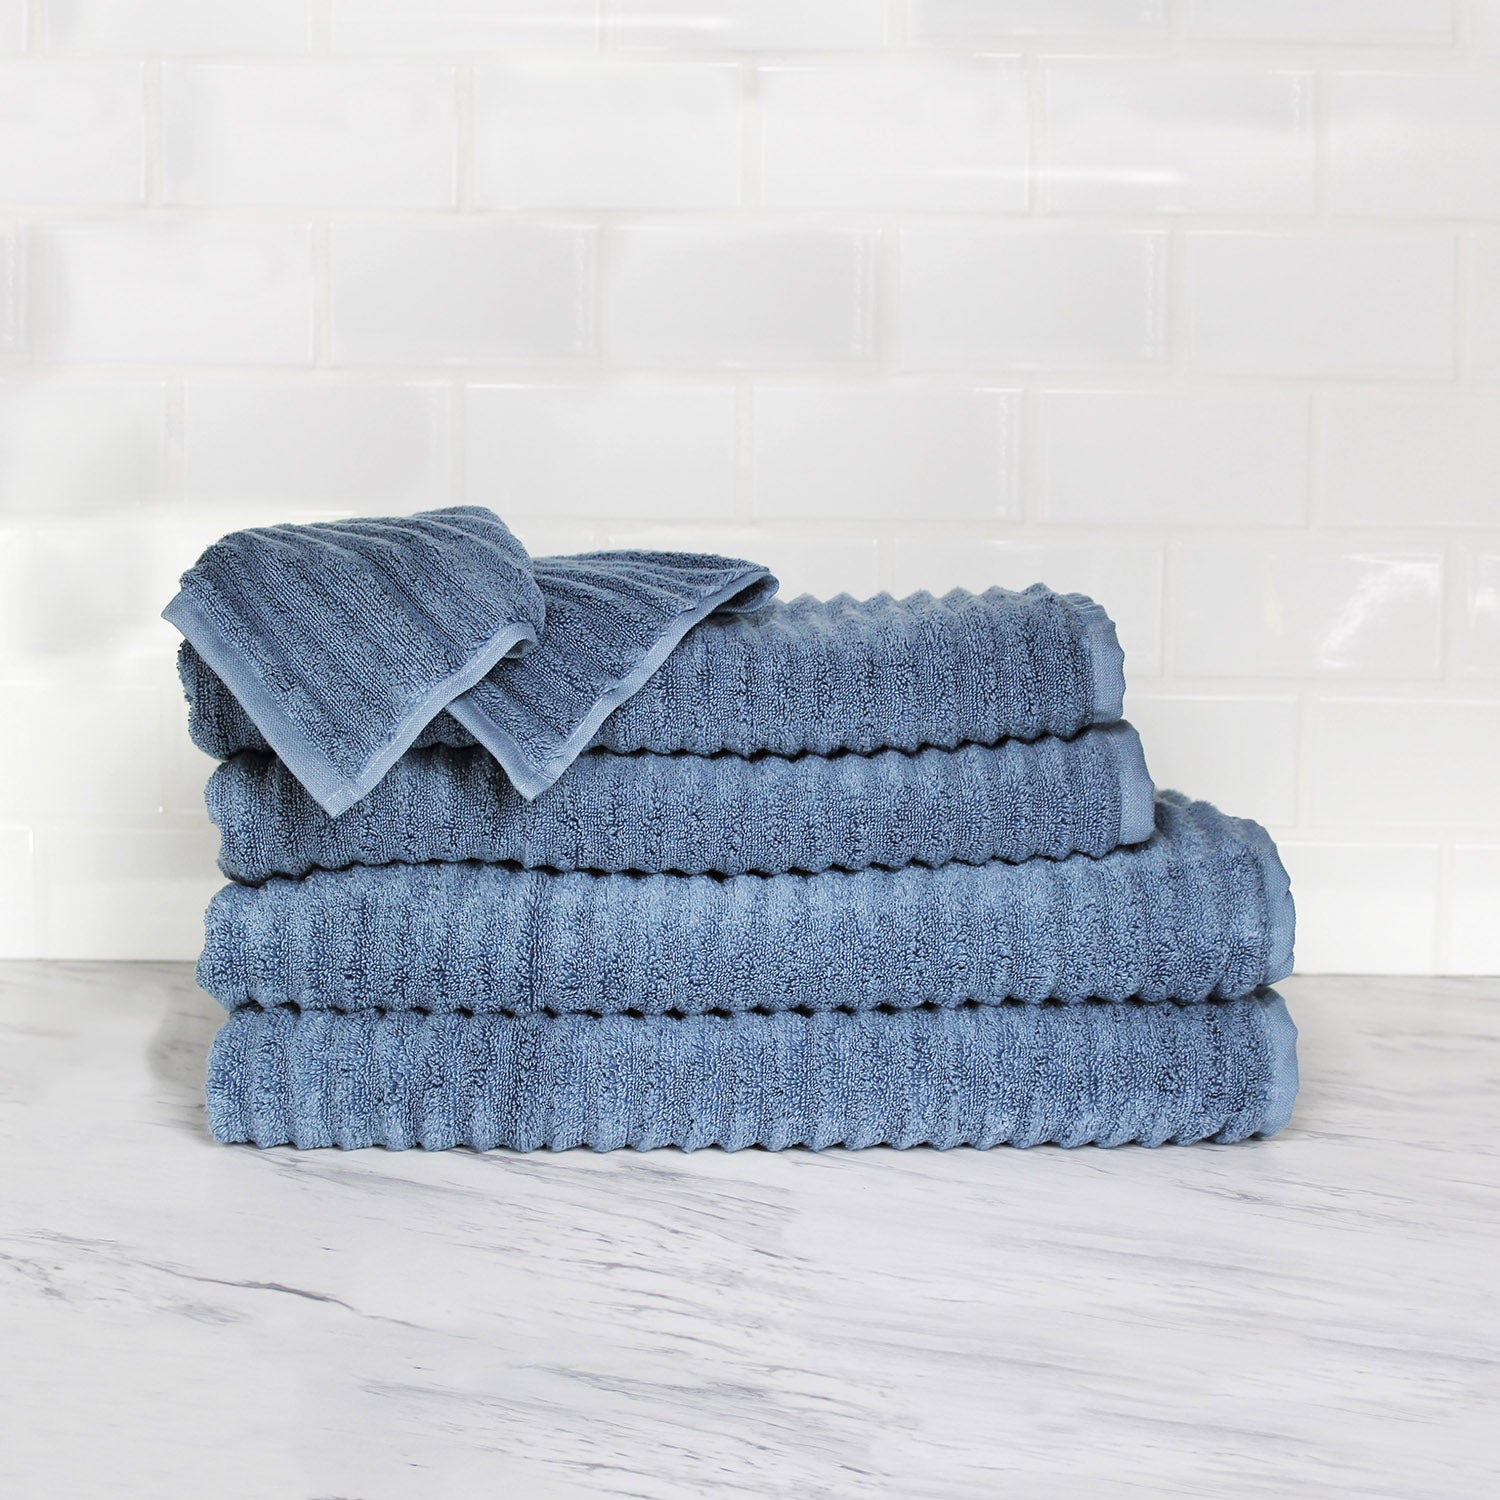 American Soft Linen 100% Turkish Cotton 6 Piece Towel Set - Sage Green